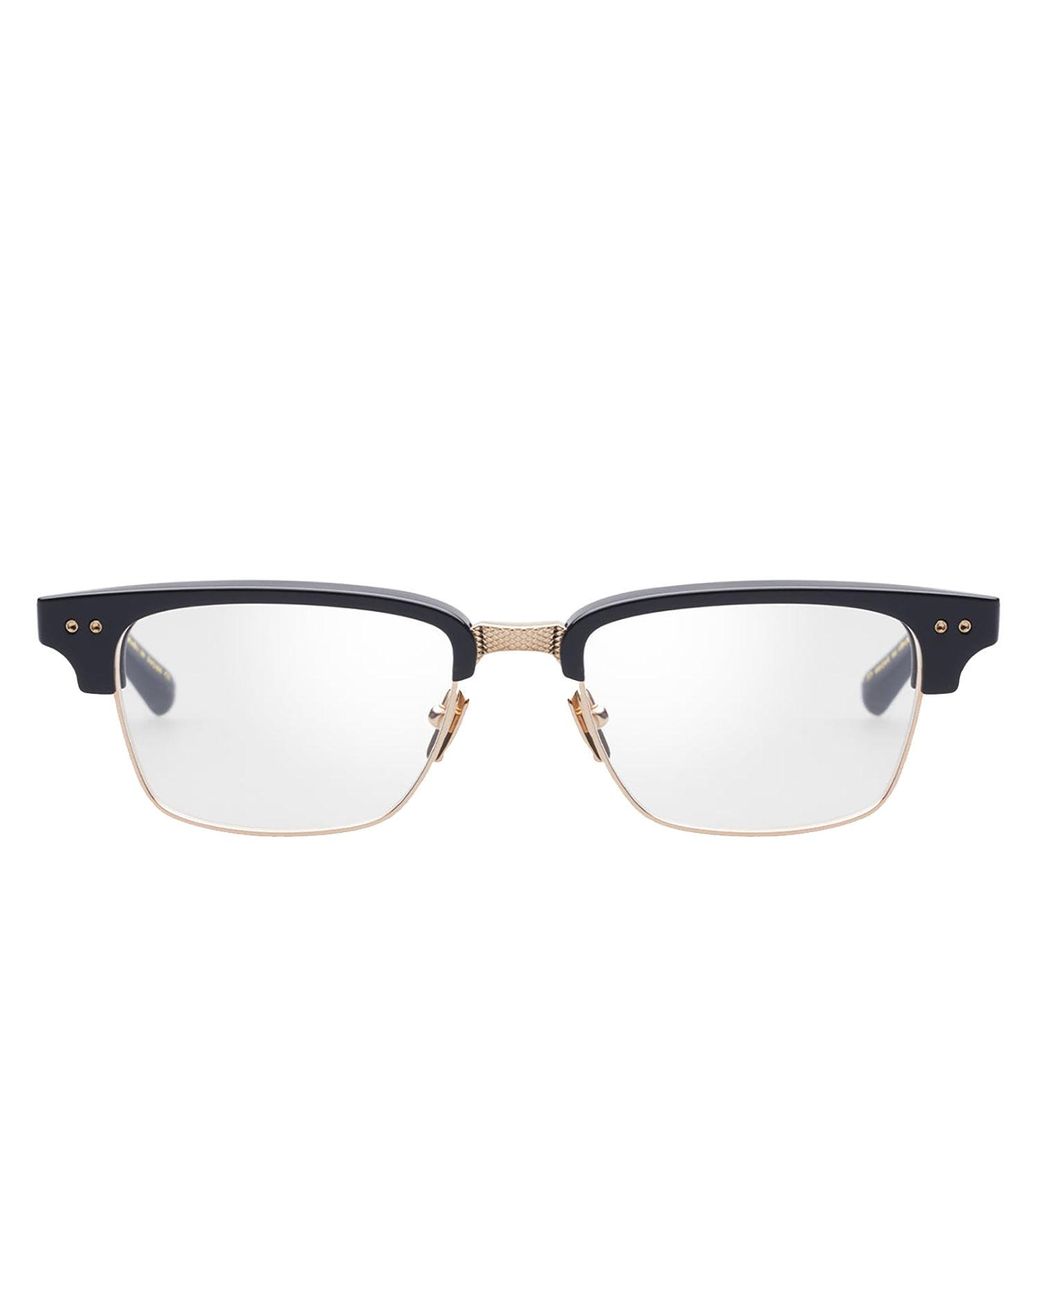 Dita Eyewear Statesman Three Drx-2064-b Clubmaster Eyeglasses in Black ...